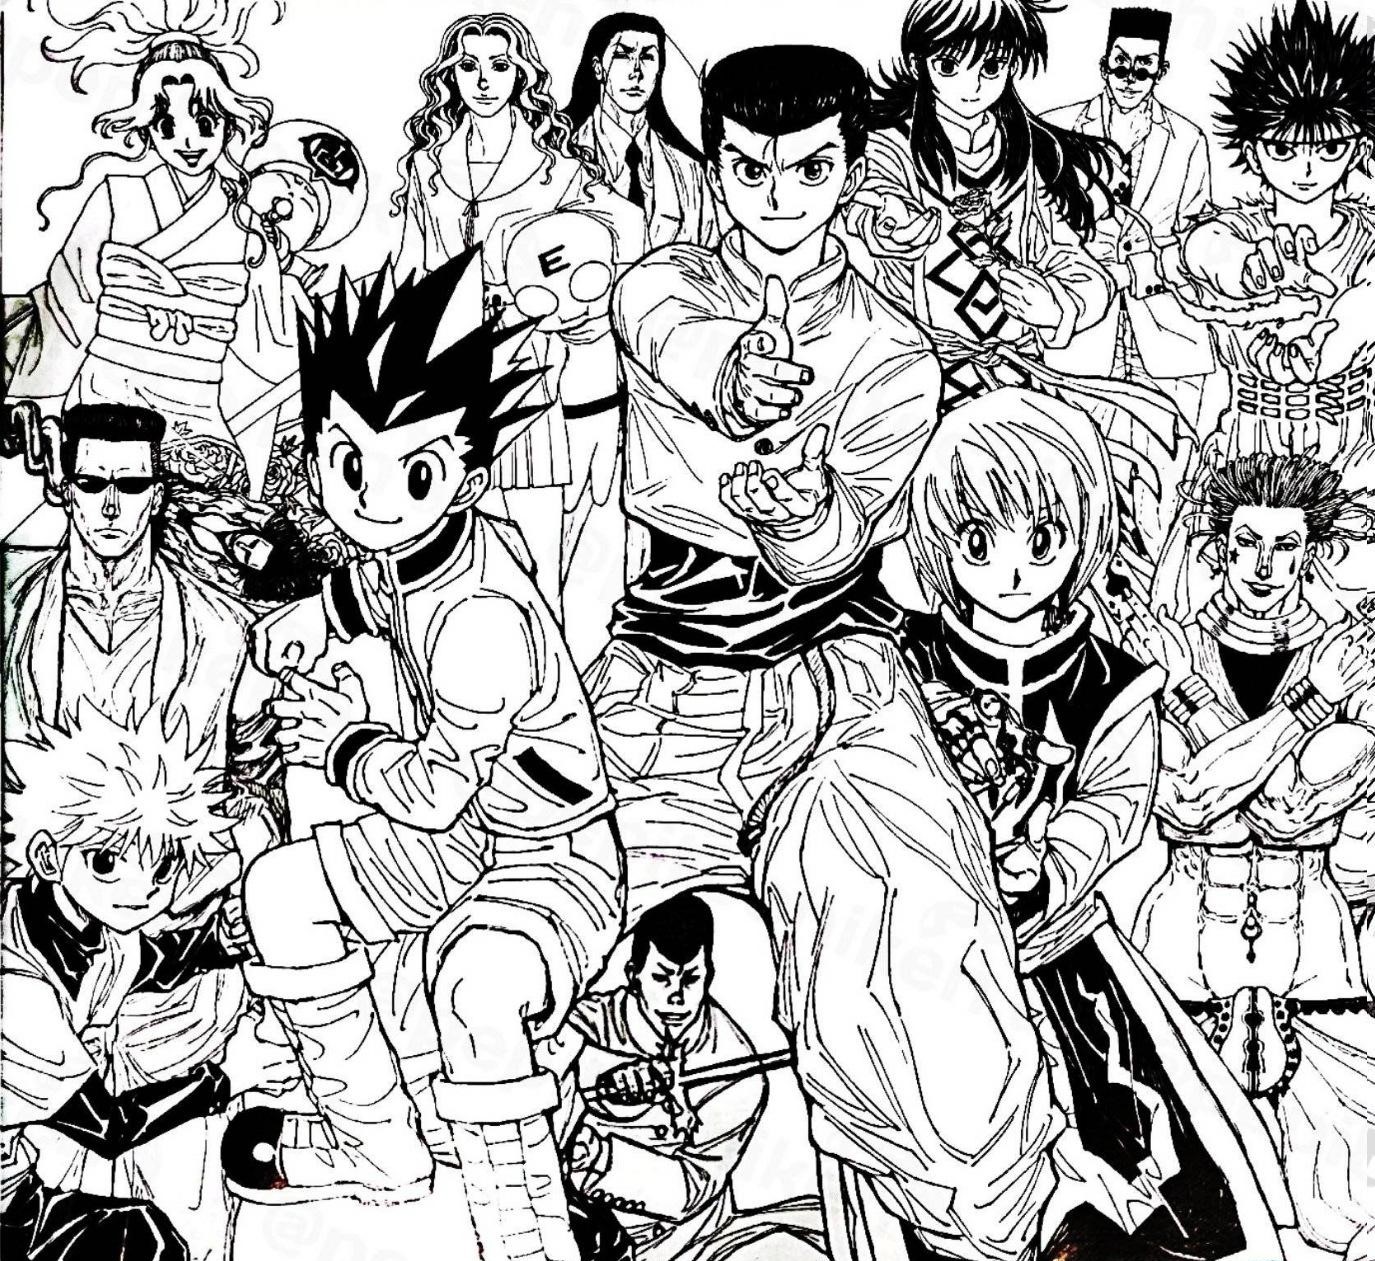 Celebrate the Return of Hunter x Hunter with This Paperback Manga Set